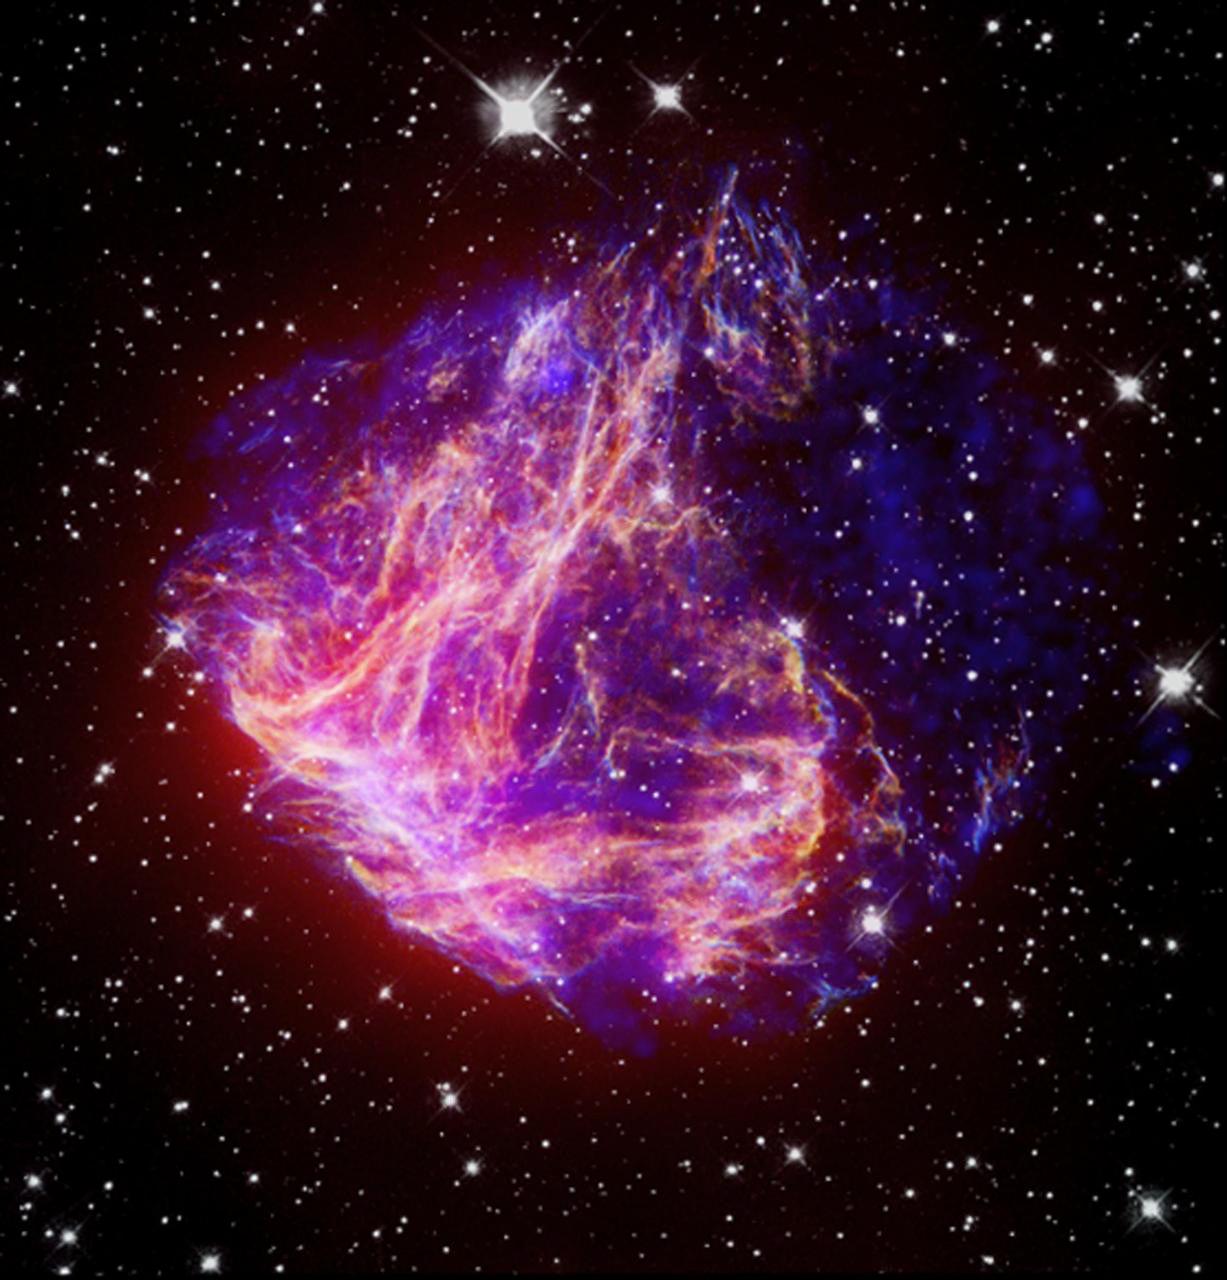 Stellar Debris in the Large Magellanic Cloud, NASA; source: https://images.nasa.gov/details-PIA09071